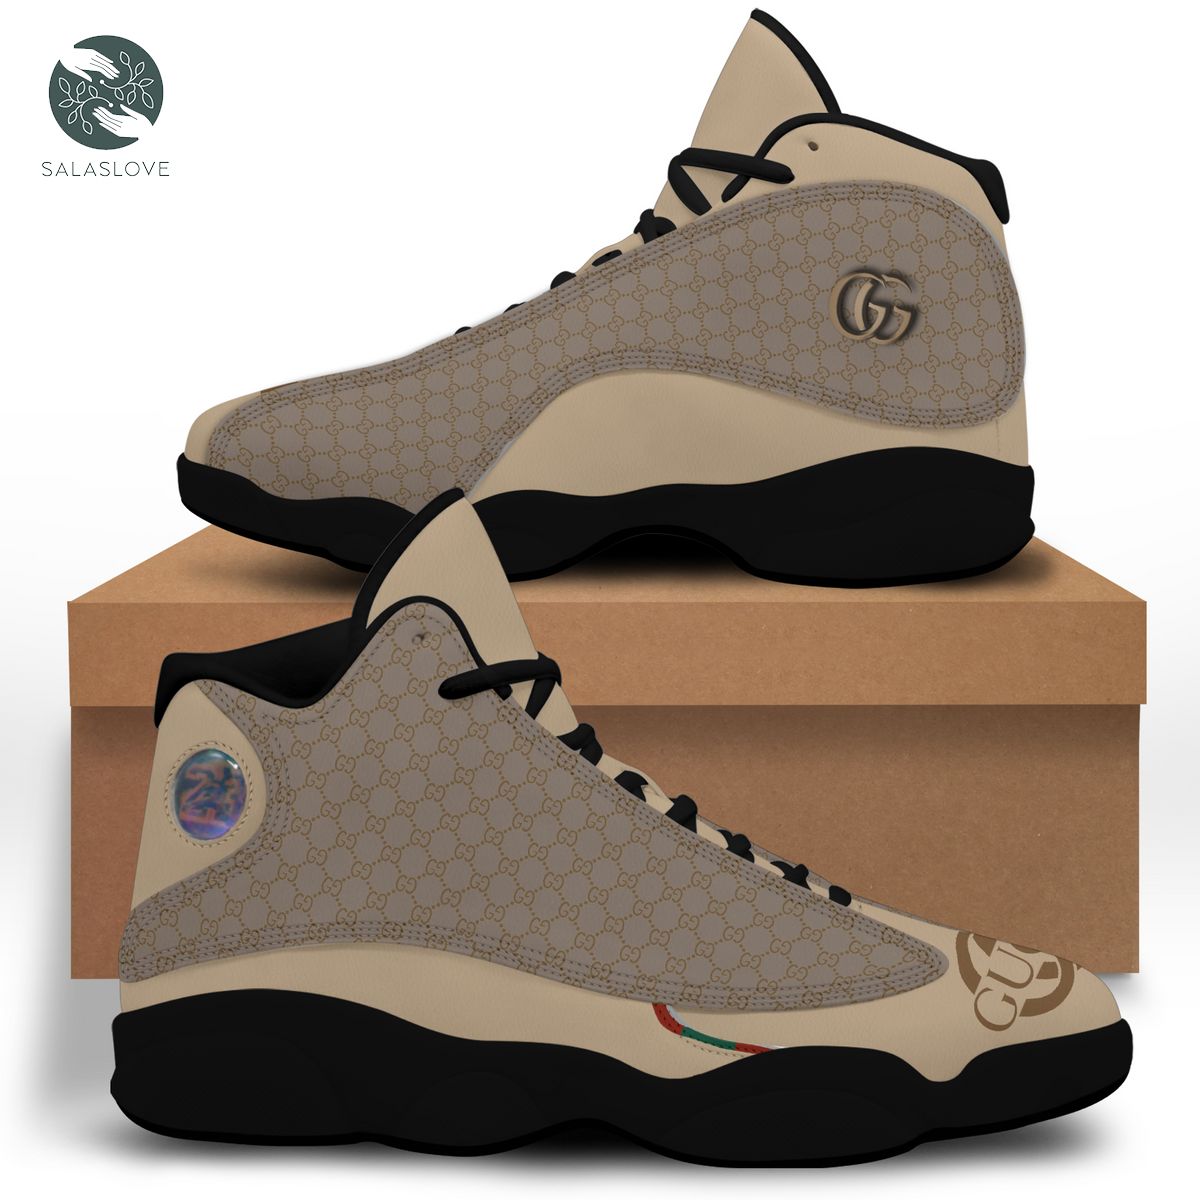 Luxury Brand Gucci Air Jordan 13 Sneakers Shoes Gifts For Men Women